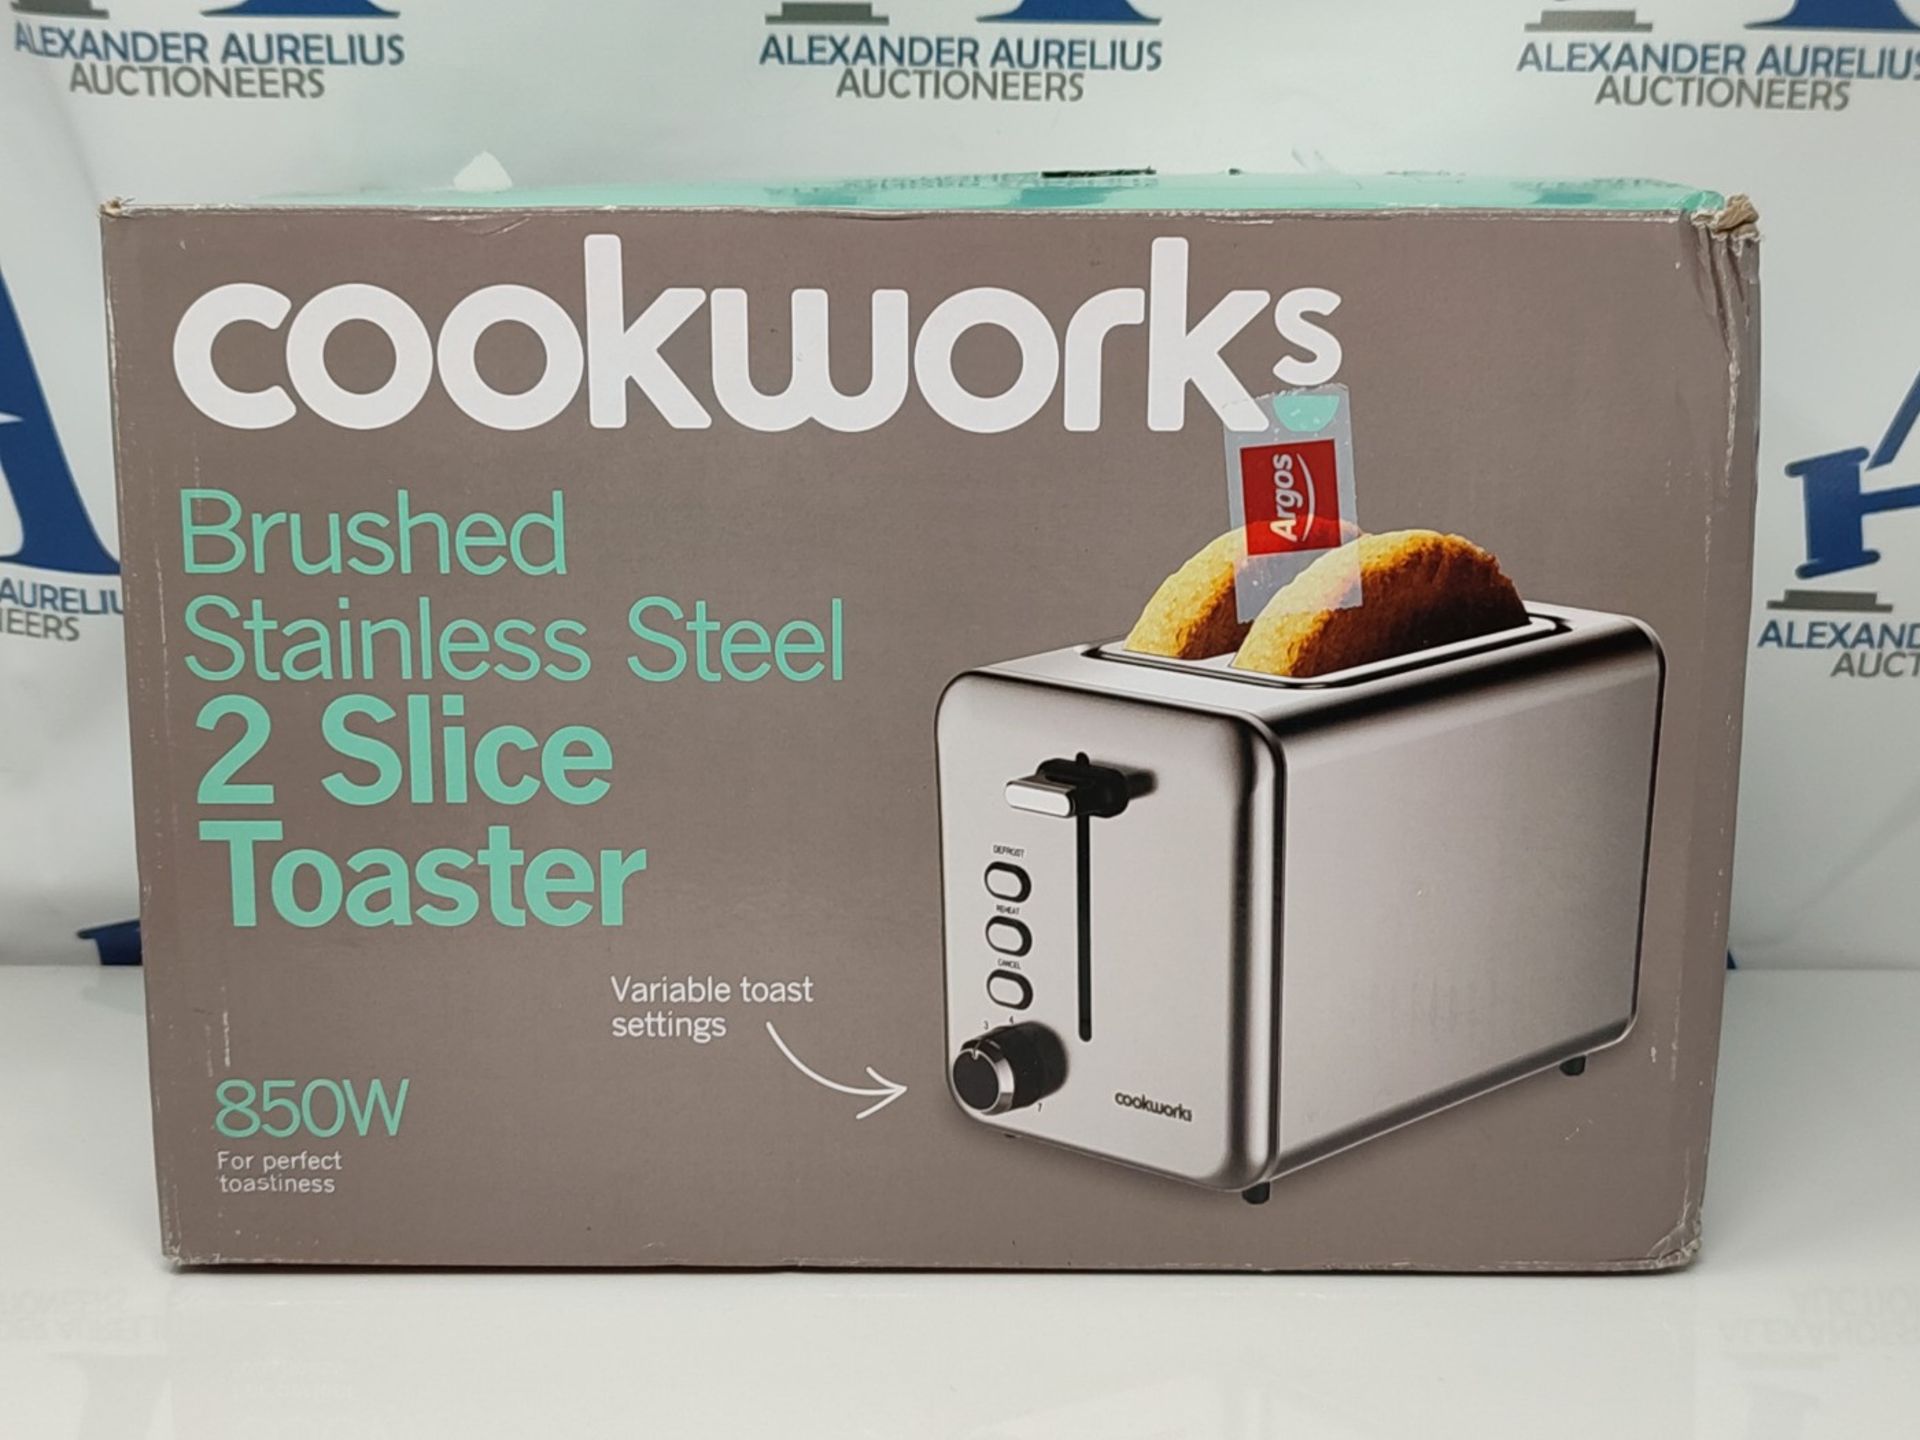 Russell Hobbs 26550 Stainless Steel 2 Slice Toaster, Black - Image 2 of 3